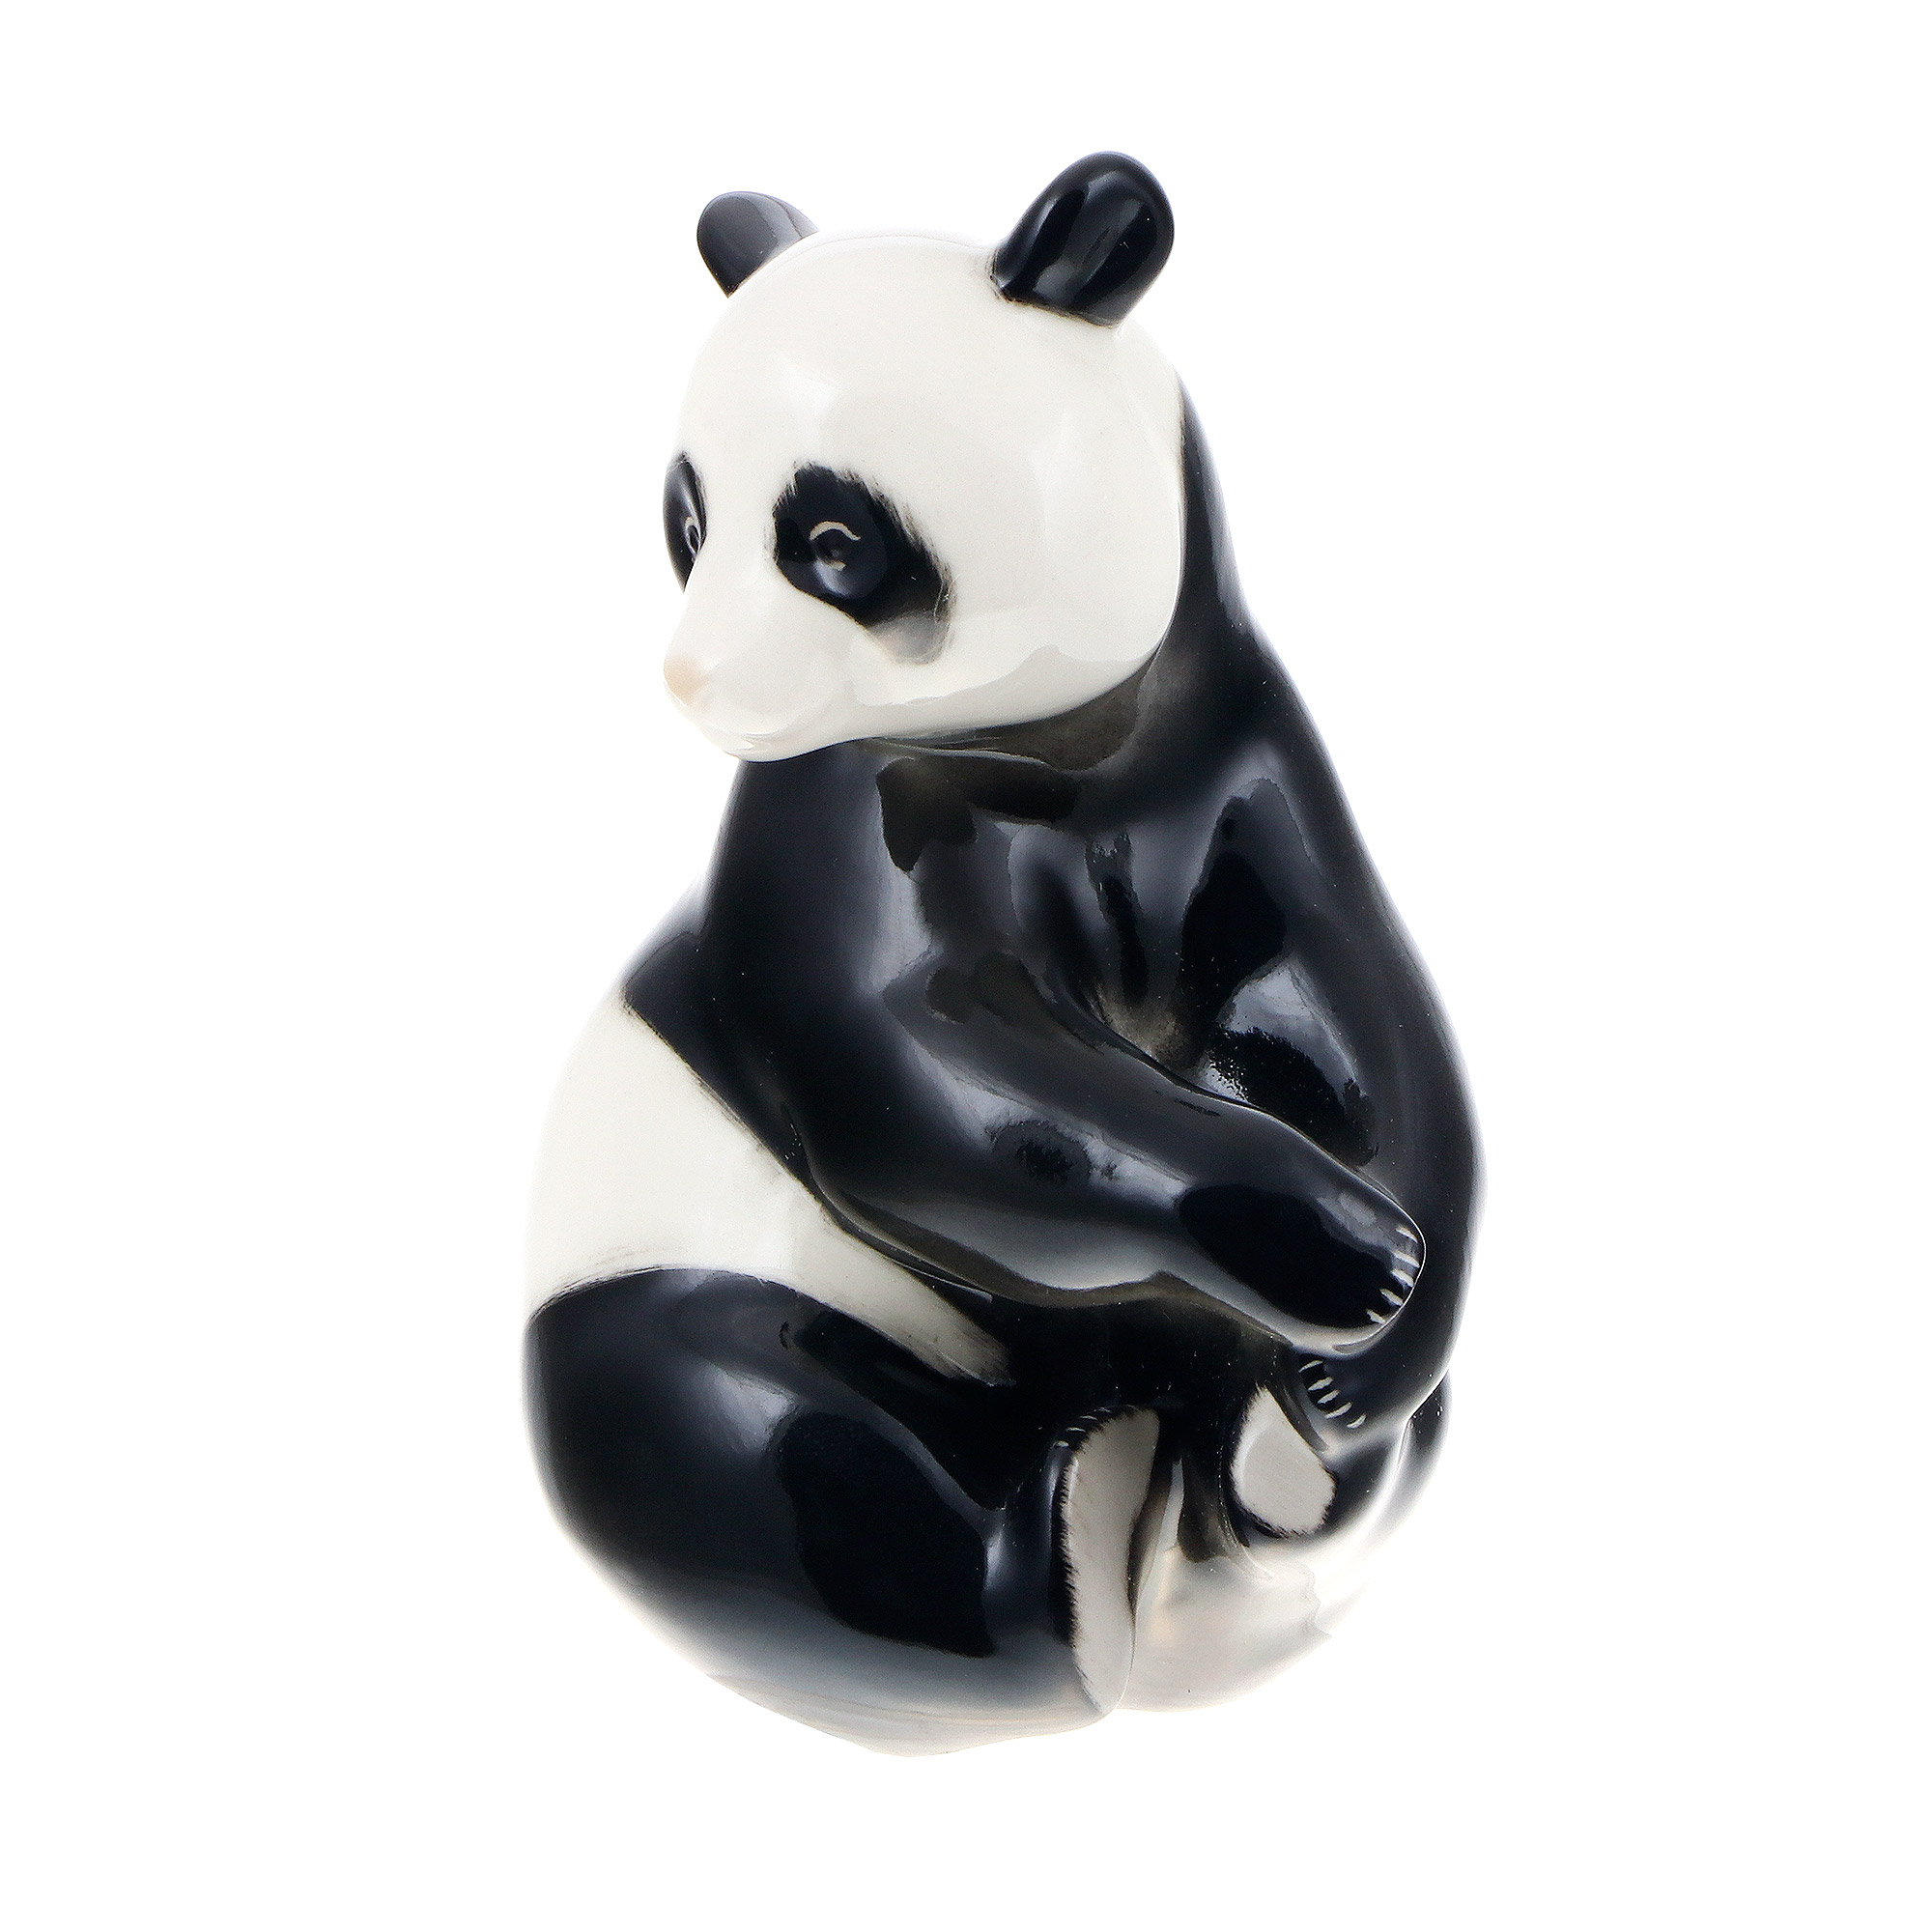 фото Скульптура лфз - медведь бамбуковый